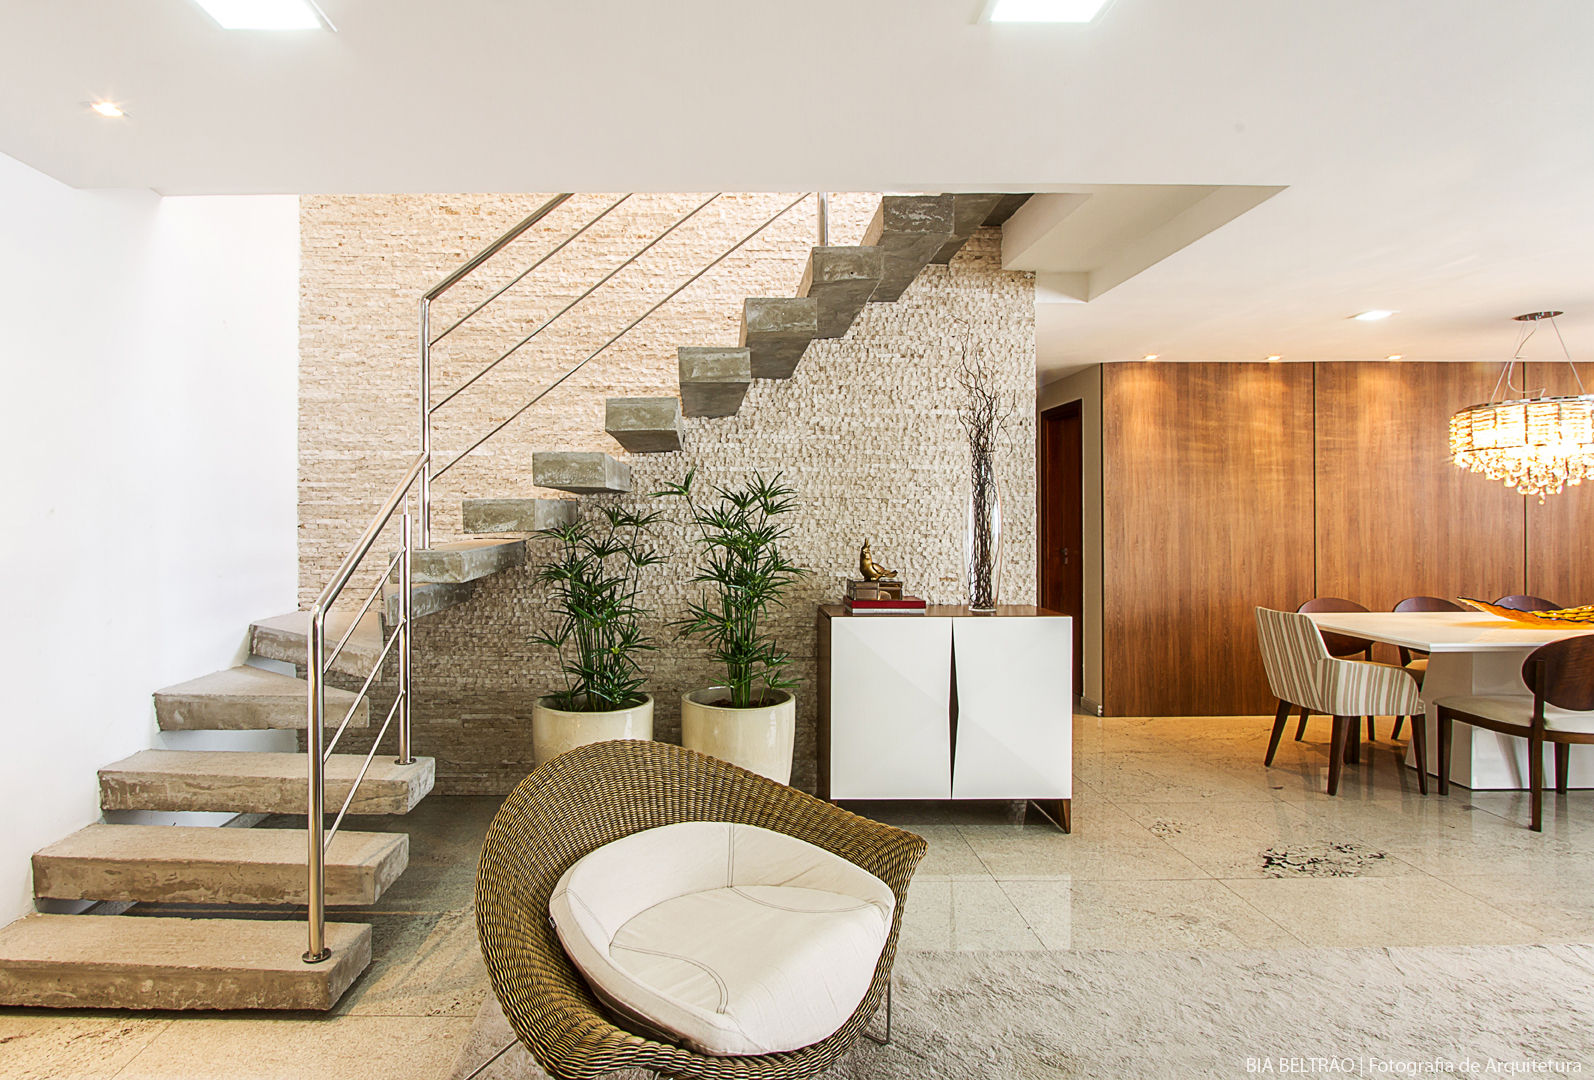 Apartamento, Maceió Al, Cris Nunes Arquiteta Cris Nunes Arquiteta Ruang Keluarga Klasik